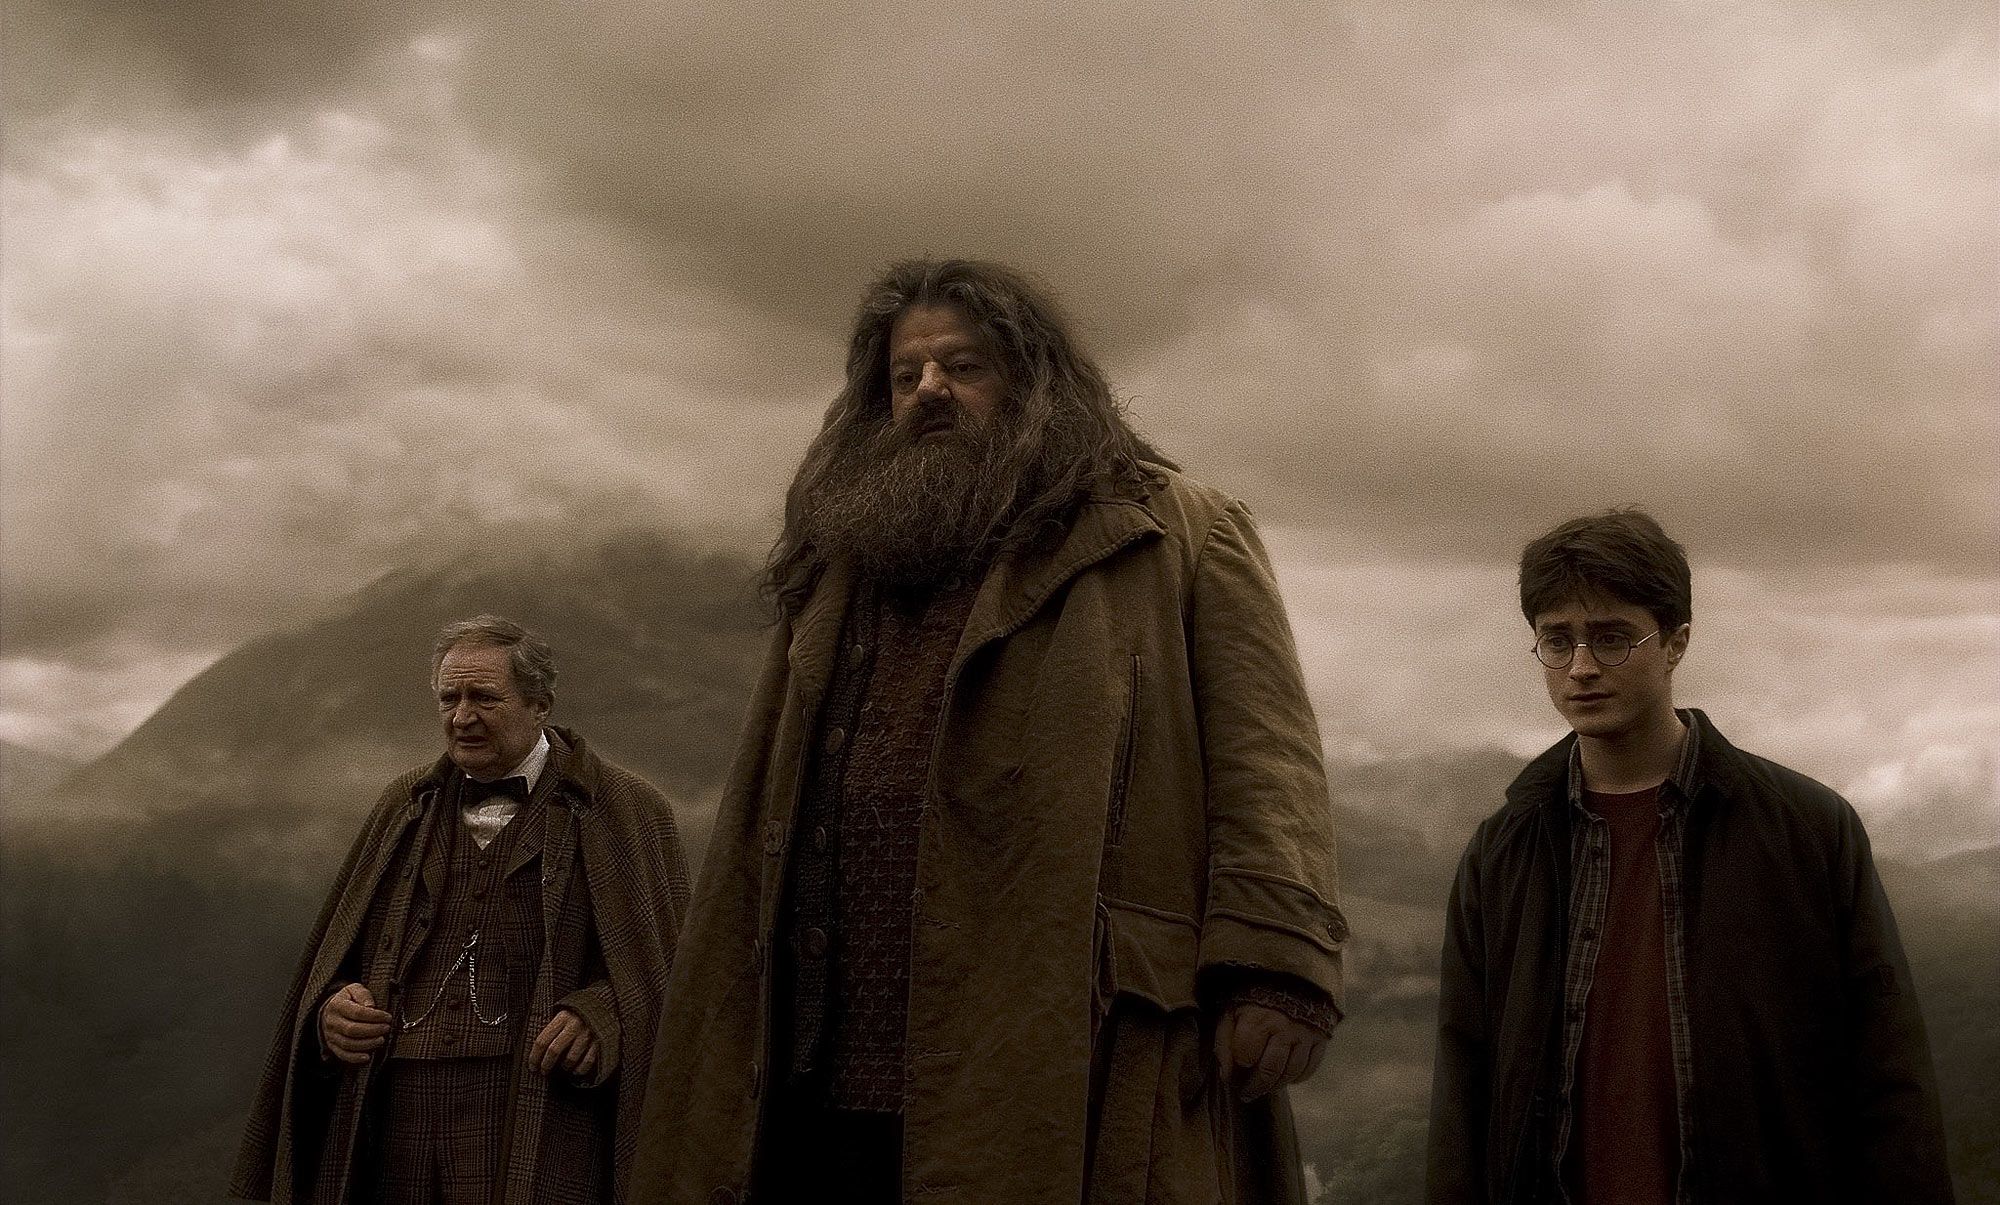 Jim Broadbent as Professor Horace Slughorn, Robbie Coltrane as Rubeus Hagrid and Daniel Radcliffe as Harry Potter